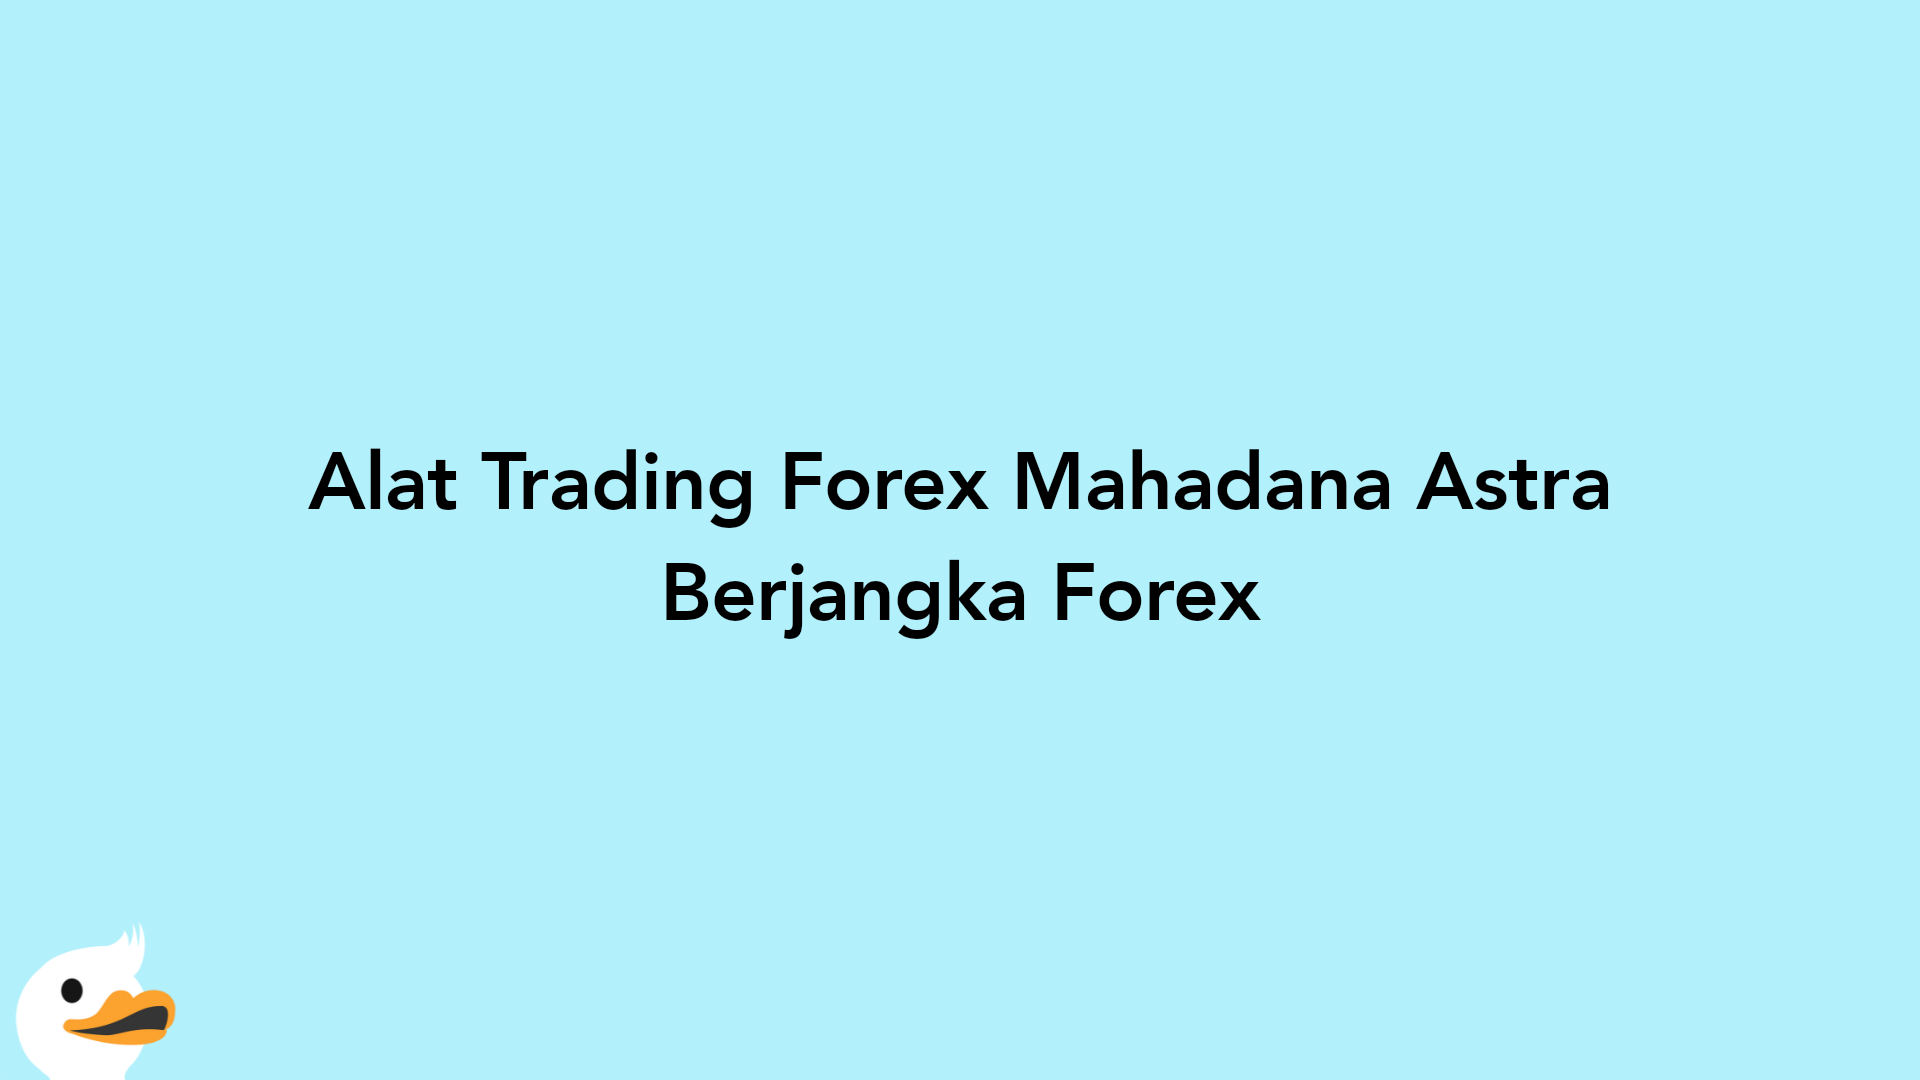 Alat Trading Forex Mahadana Astra Berjangka Forex